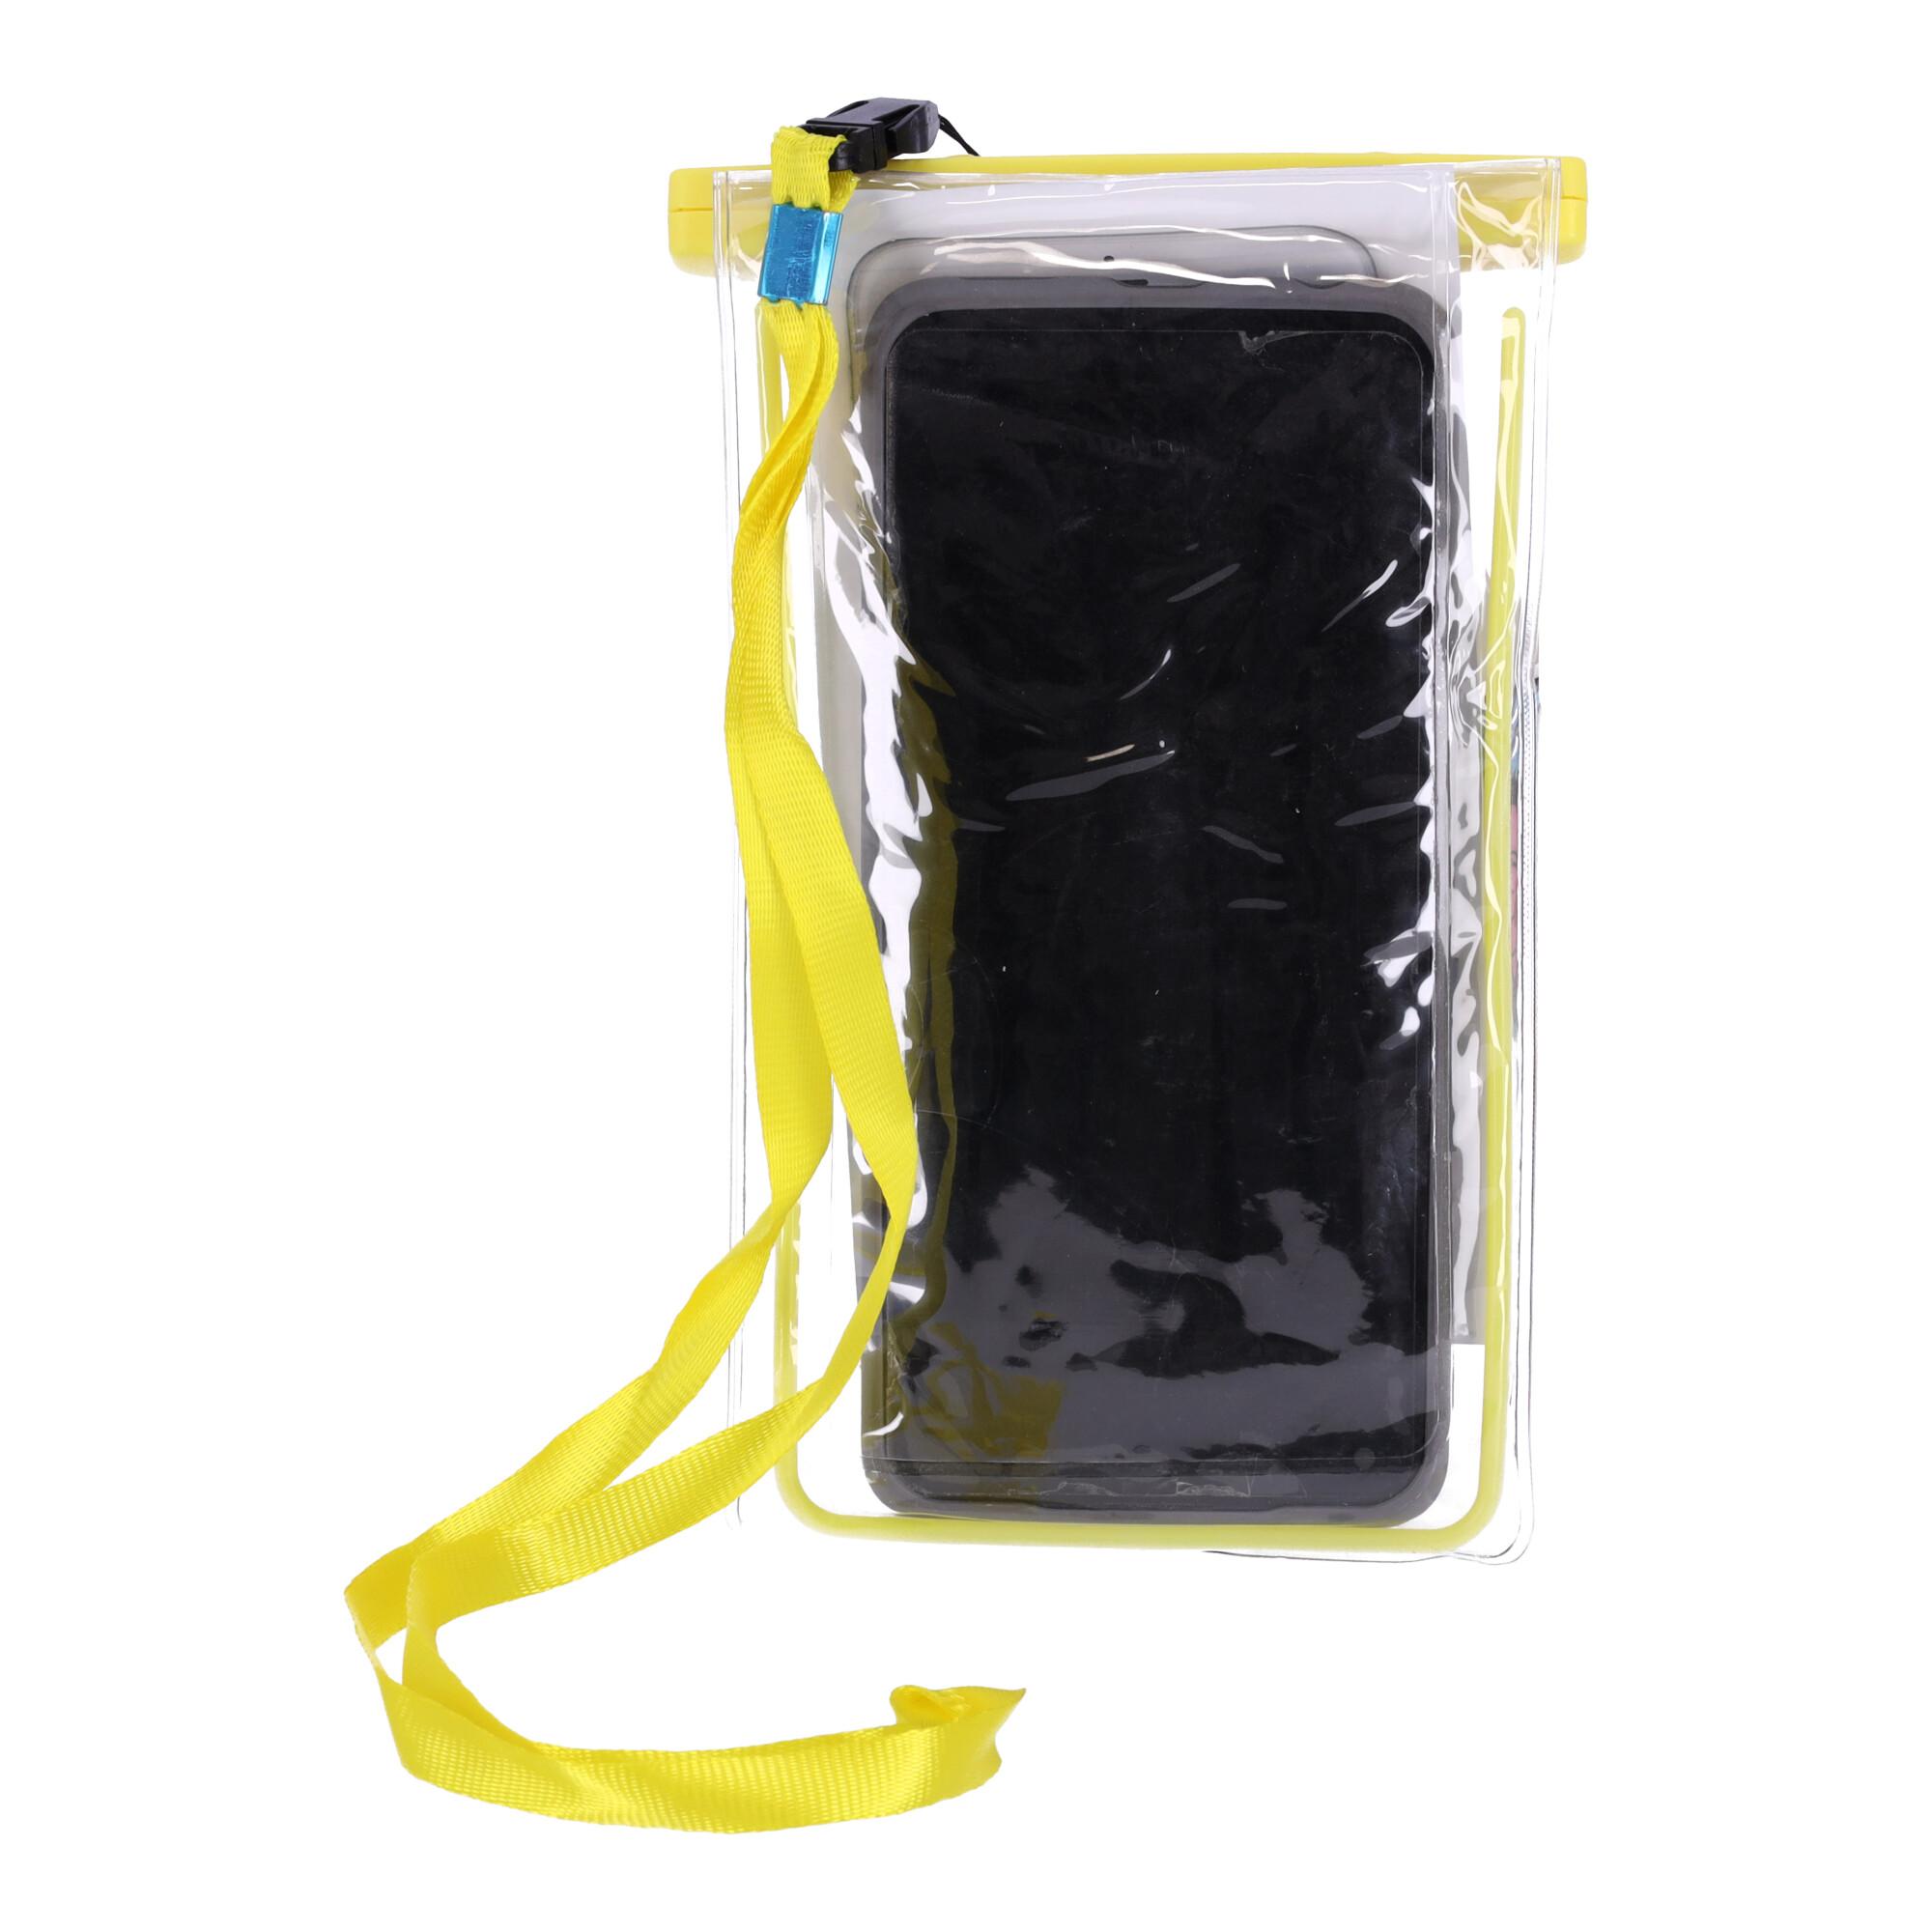 Waterproof universal case, phone cover - yellow